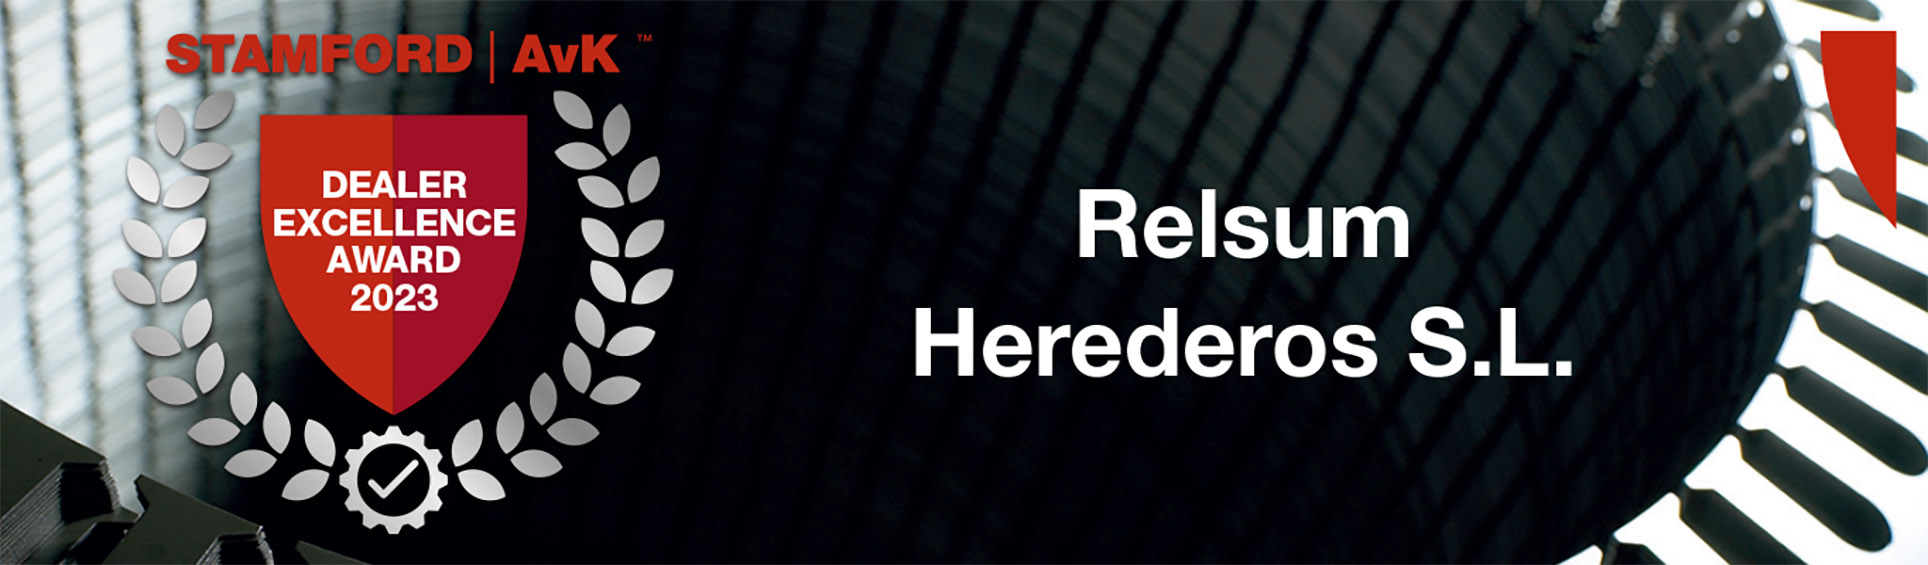 Banner pie dealer excellence 2023 Relsum Herederos